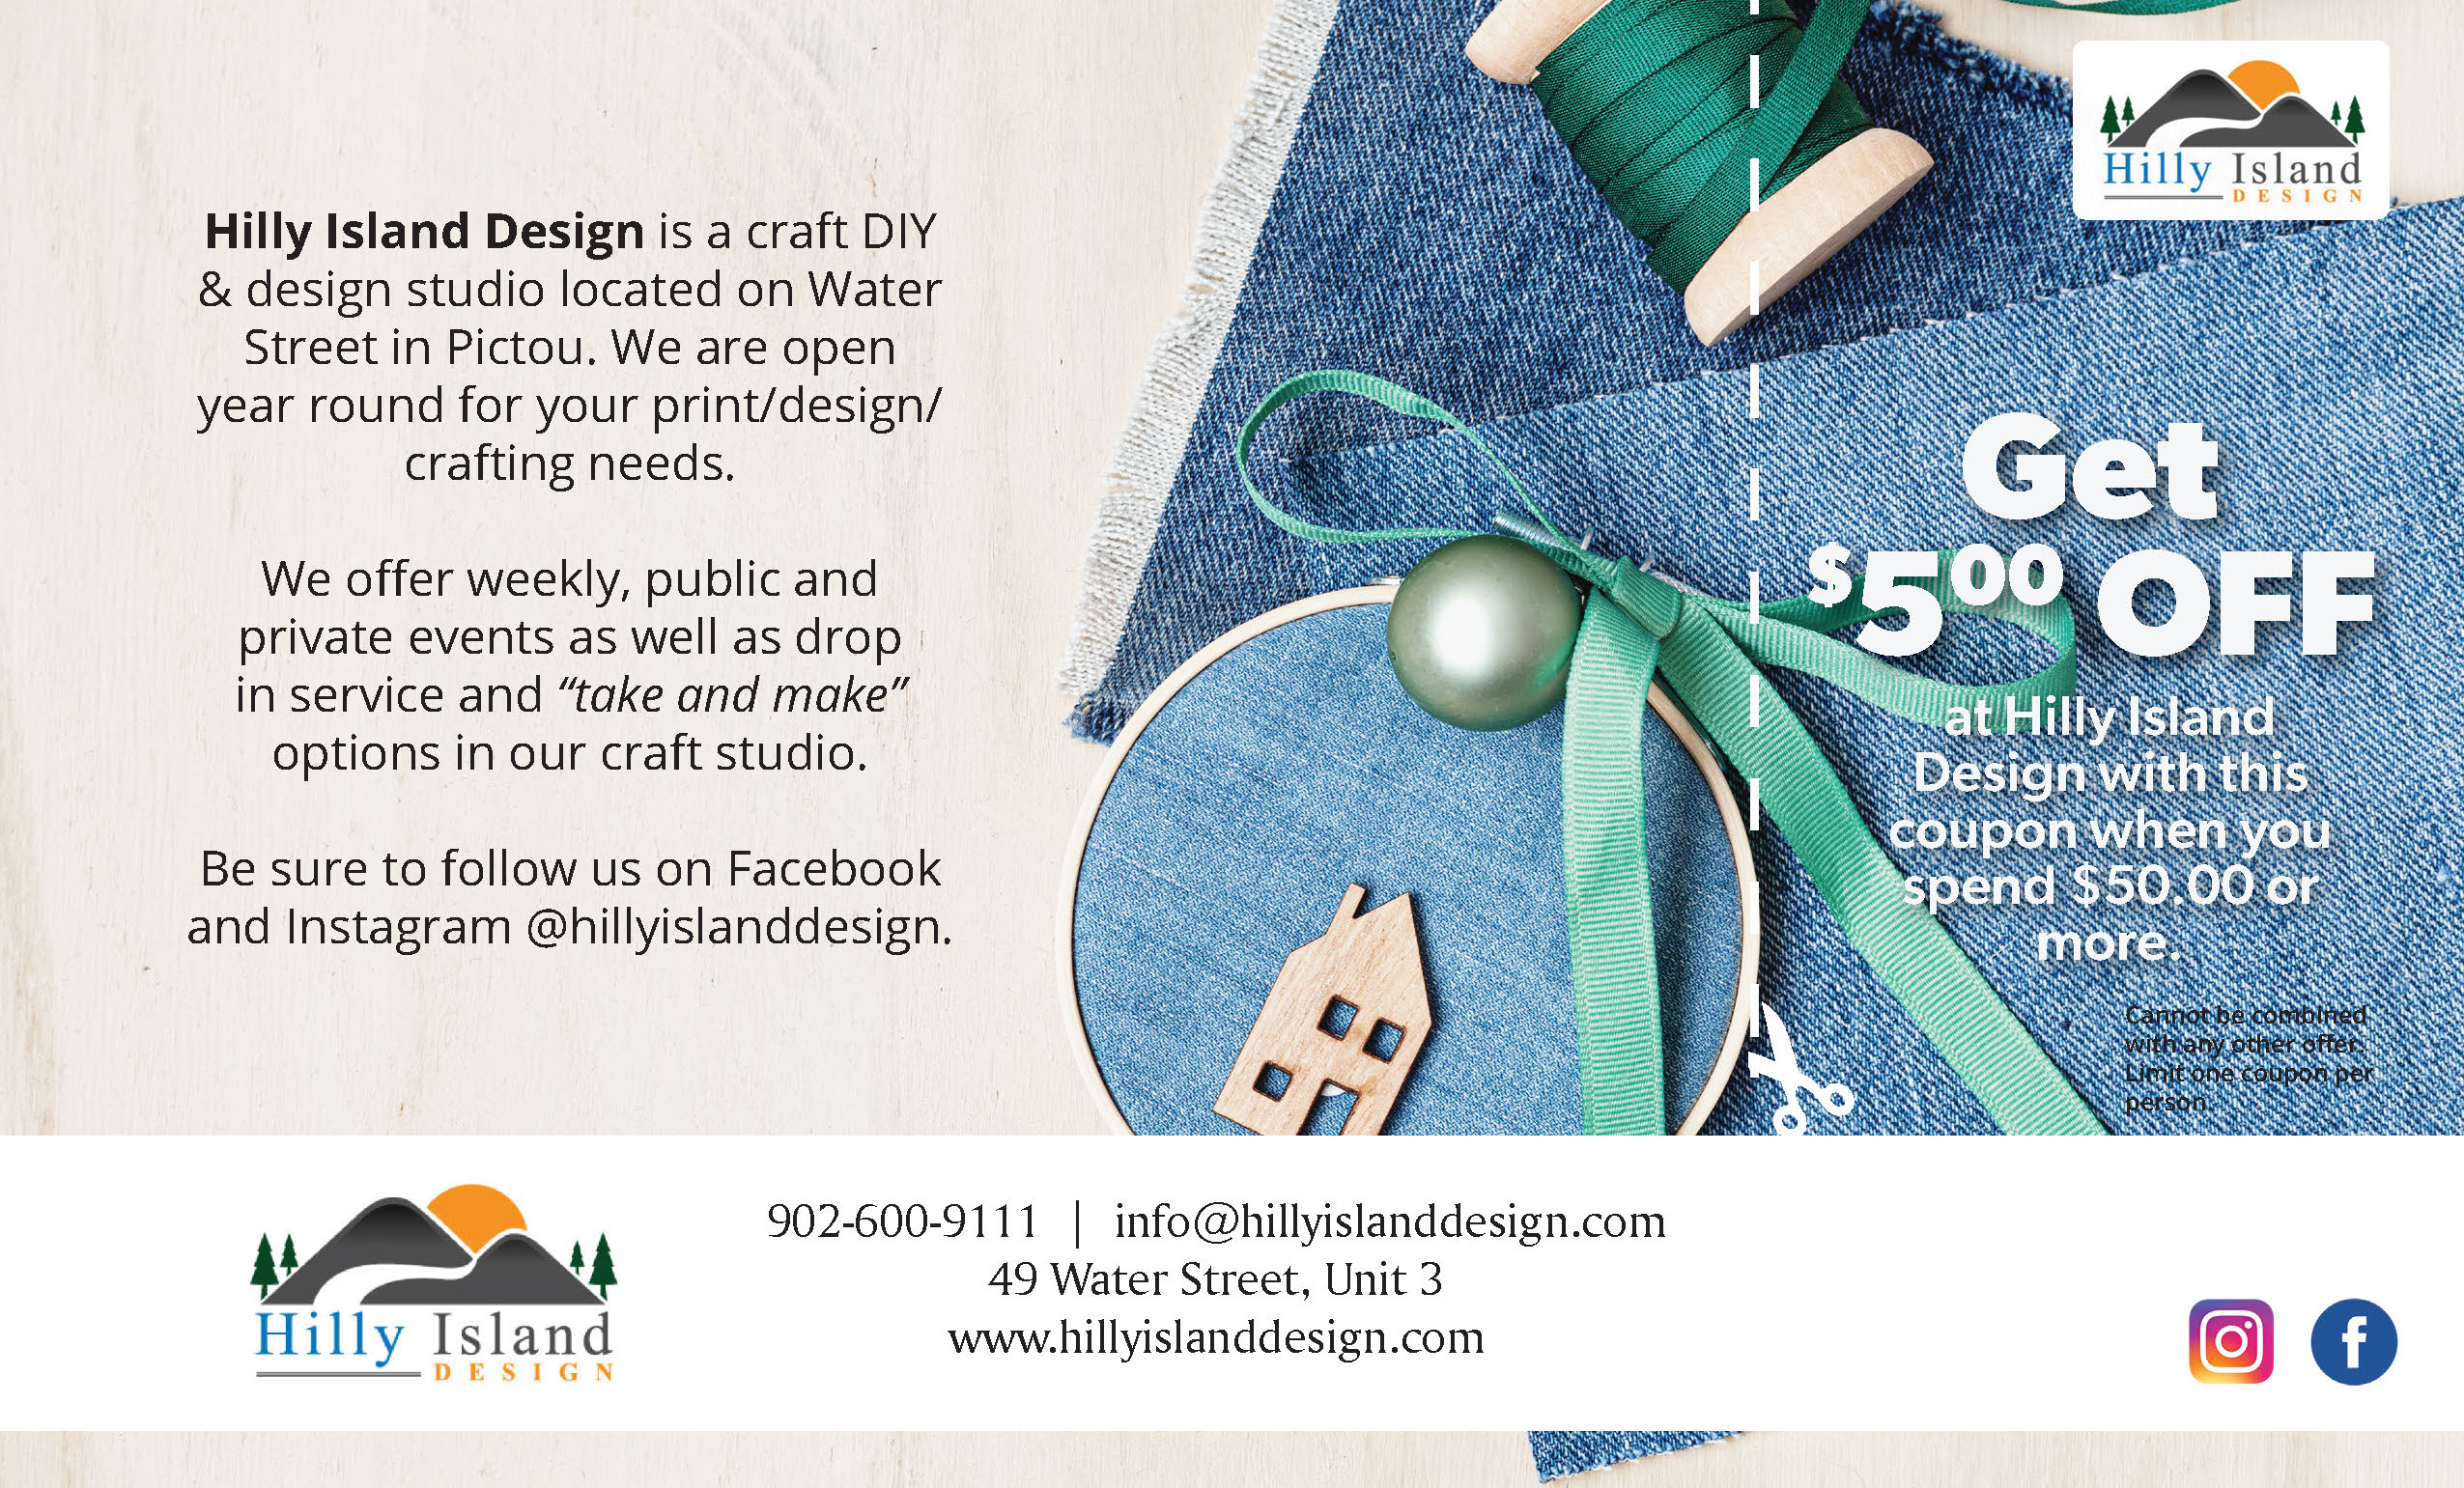 Hilly Island Design, Pictou, Nova Scotia advertisement